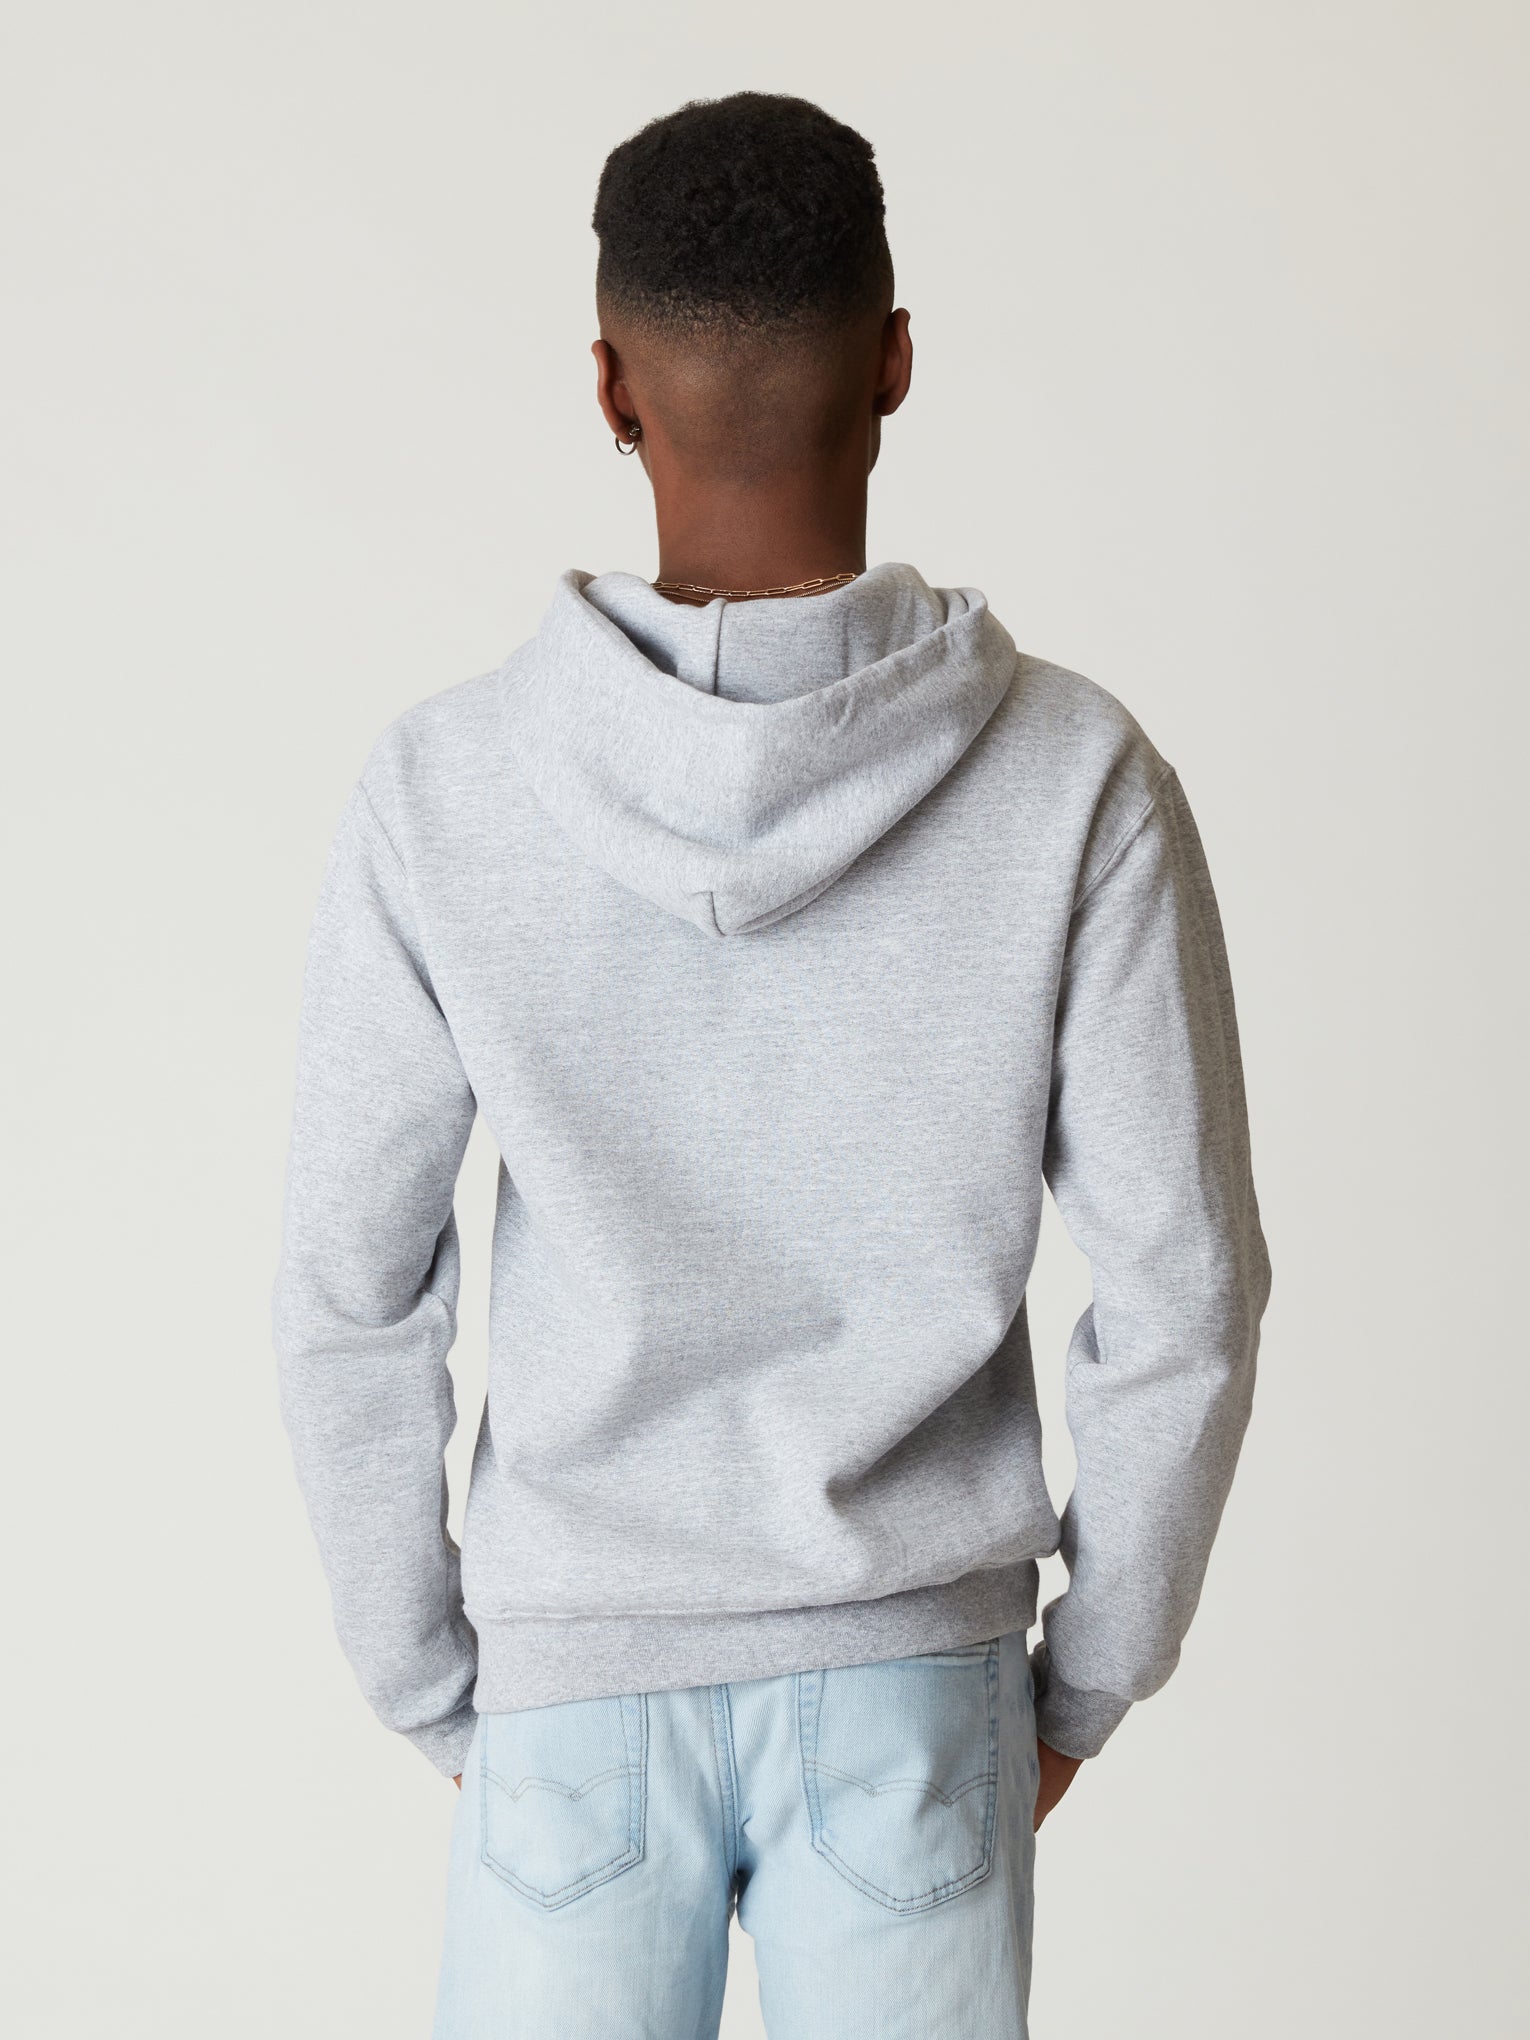 MIT Hooded Sweatshirt – Shop Harvard The